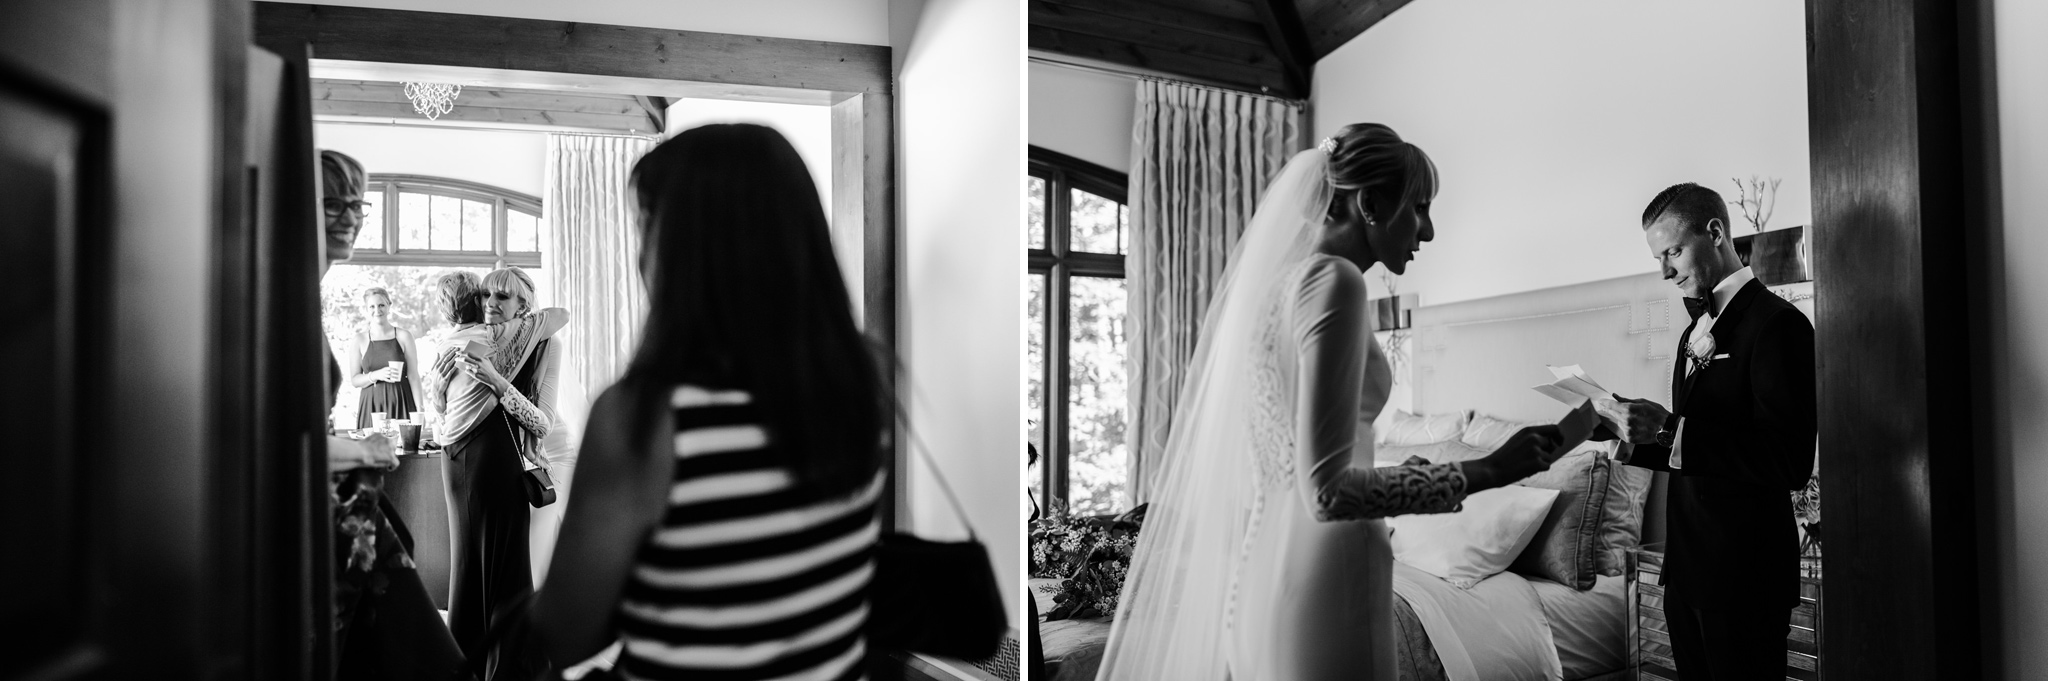 045-bride-getting-ready-toronto-wedding-photographer.jpg